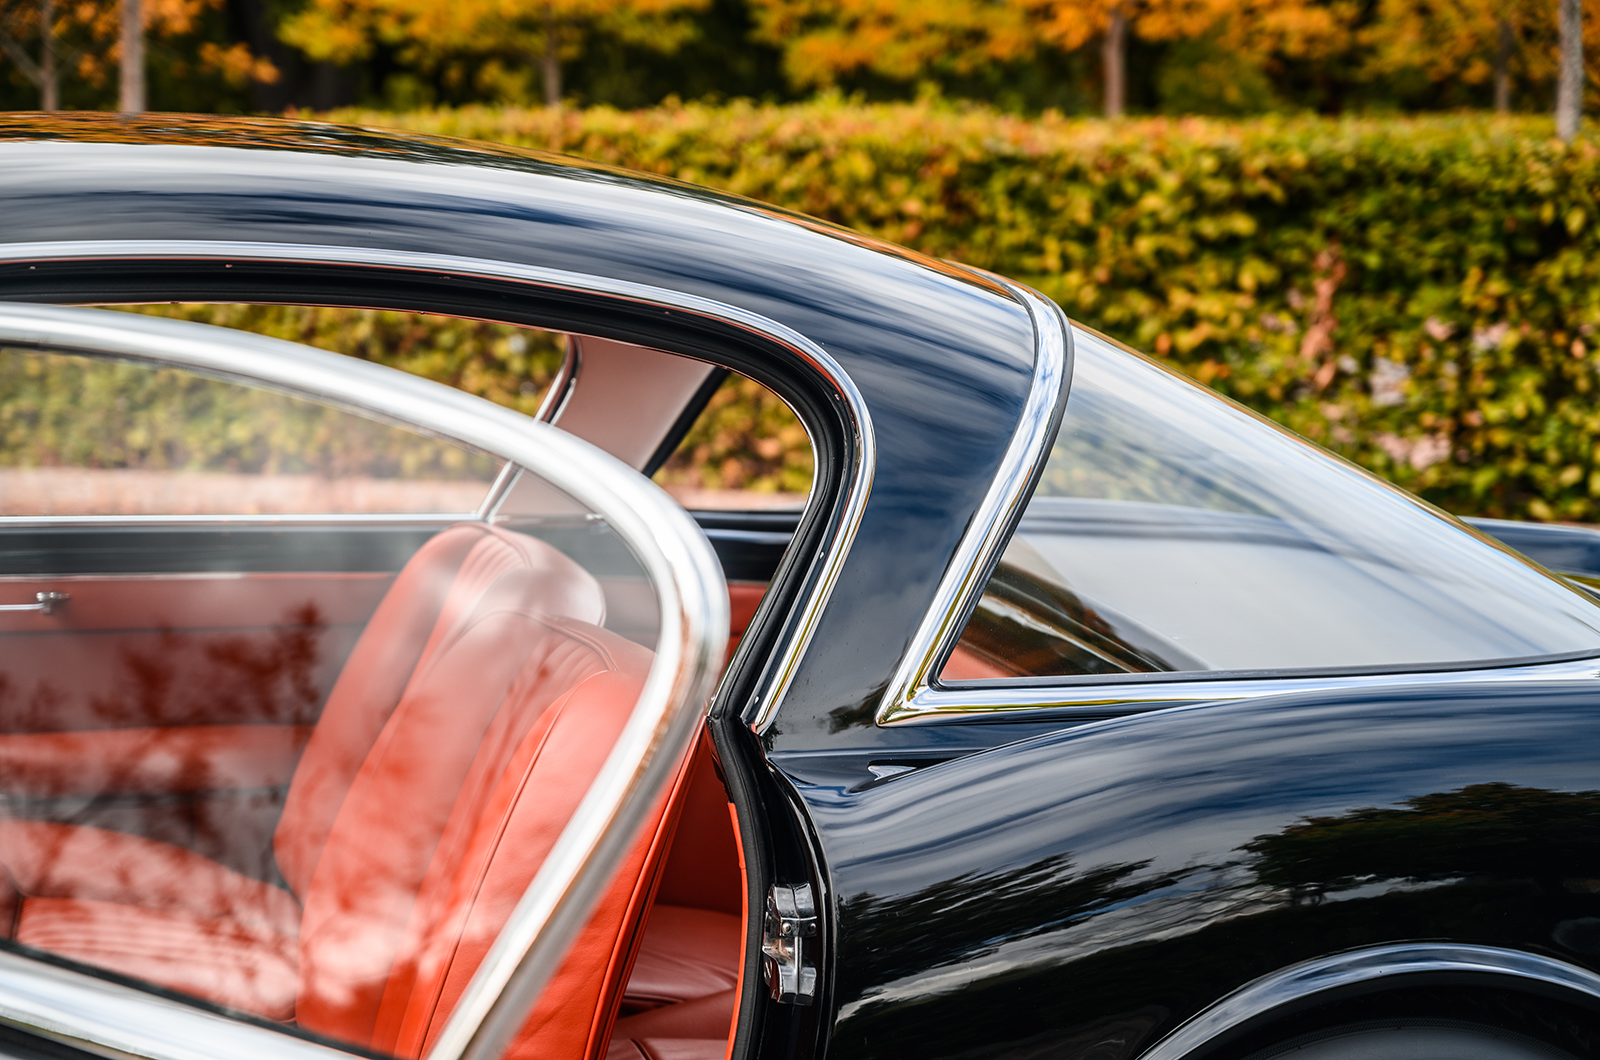 Classic & Sports Car – How brilliant Bertone reimagined the Jaguar XK150